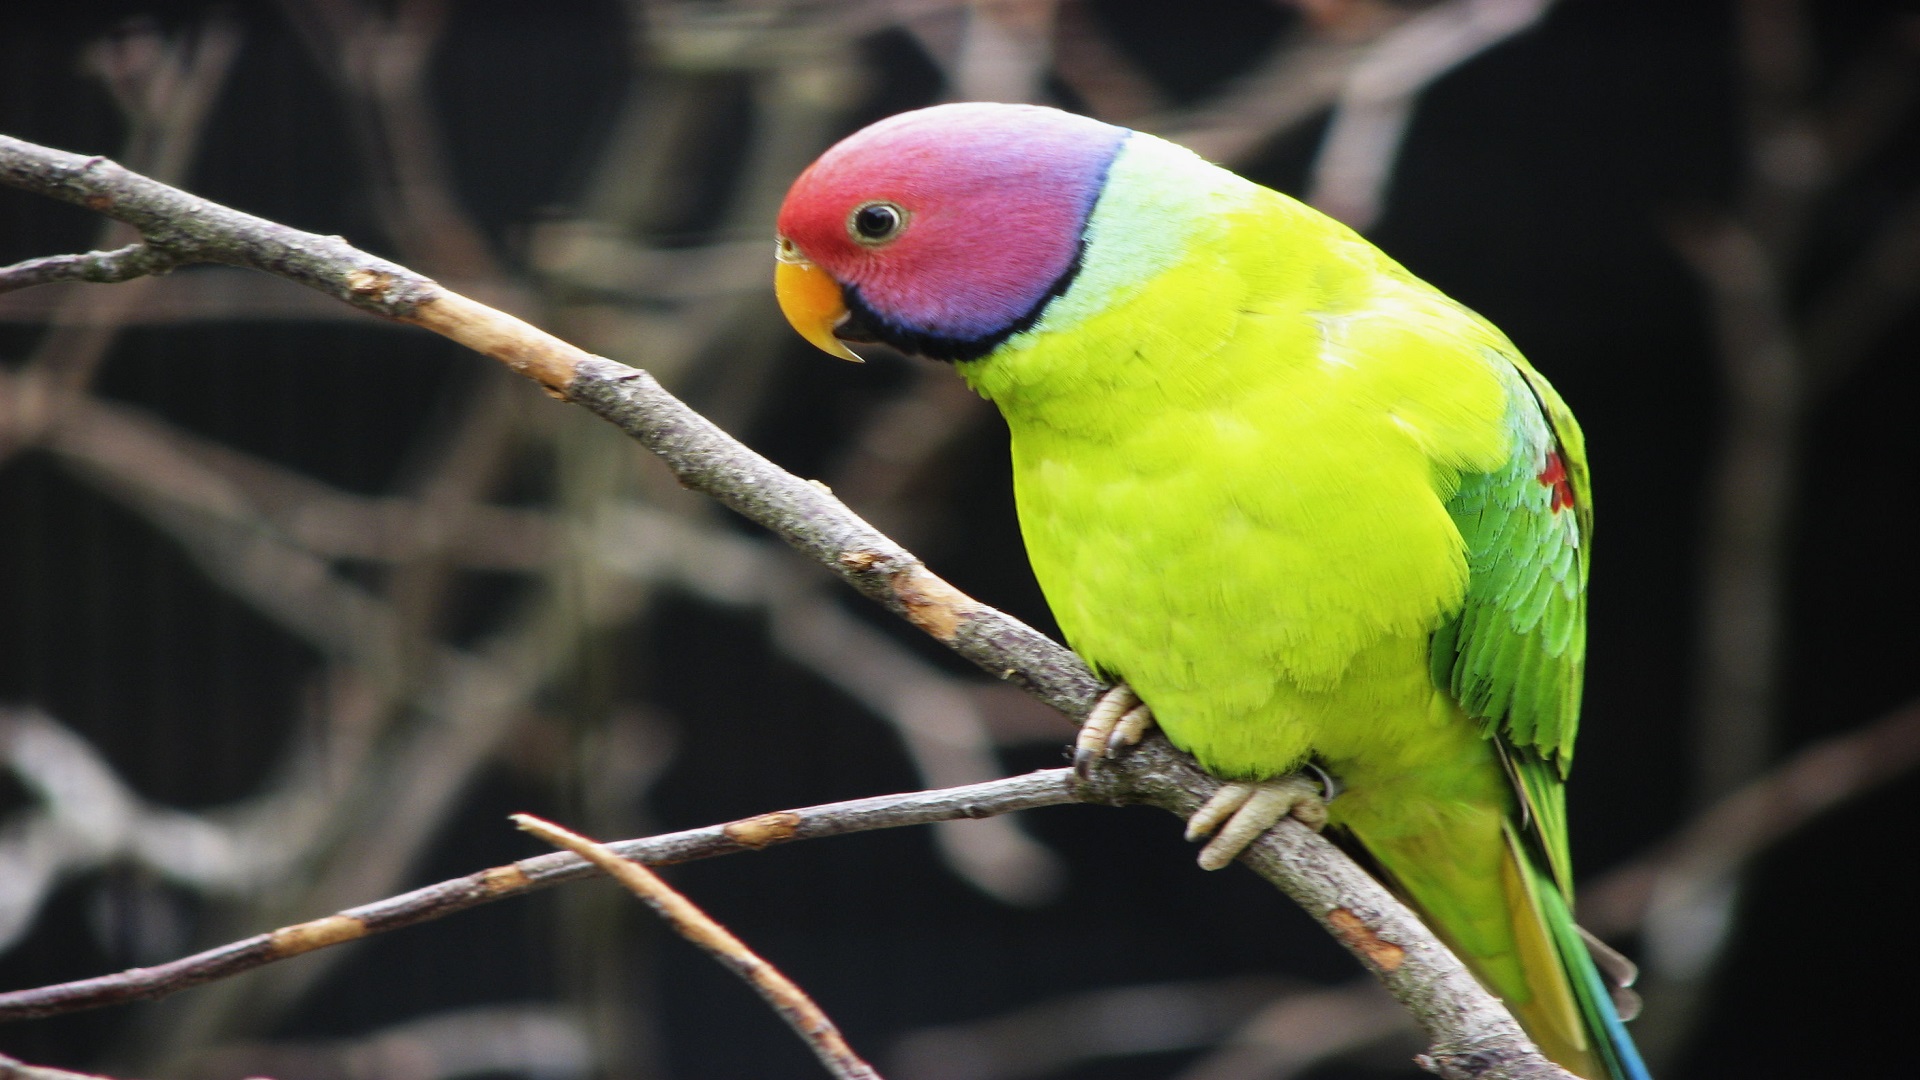 Colorful Parrot Birds Photo - Bird Hd Photo Download - HD Wallpaper 